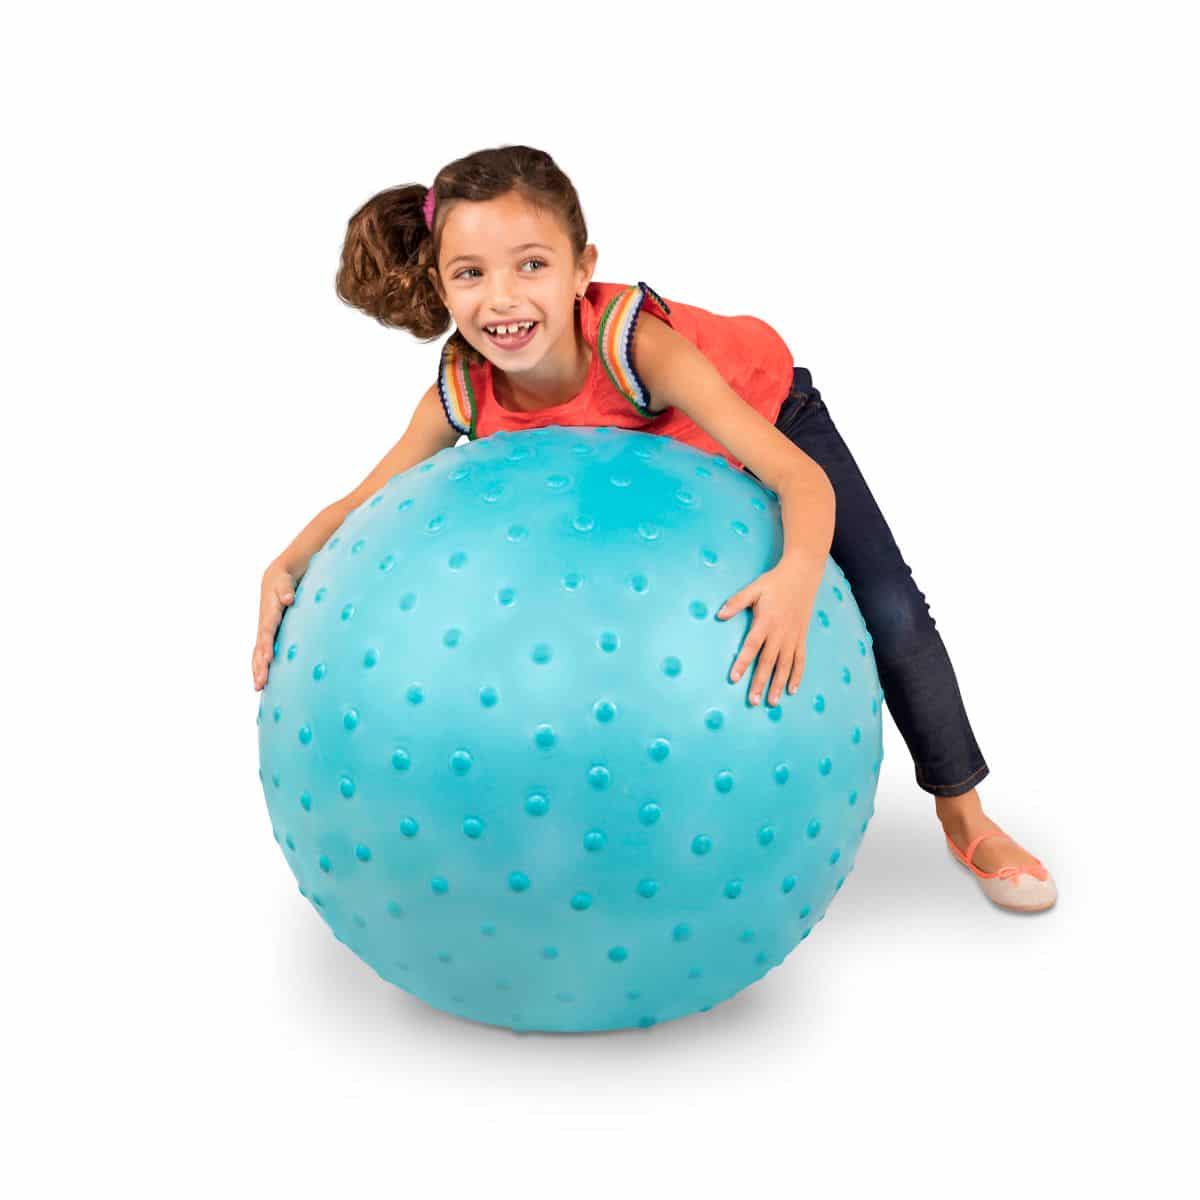 Kid on bouncy ball.